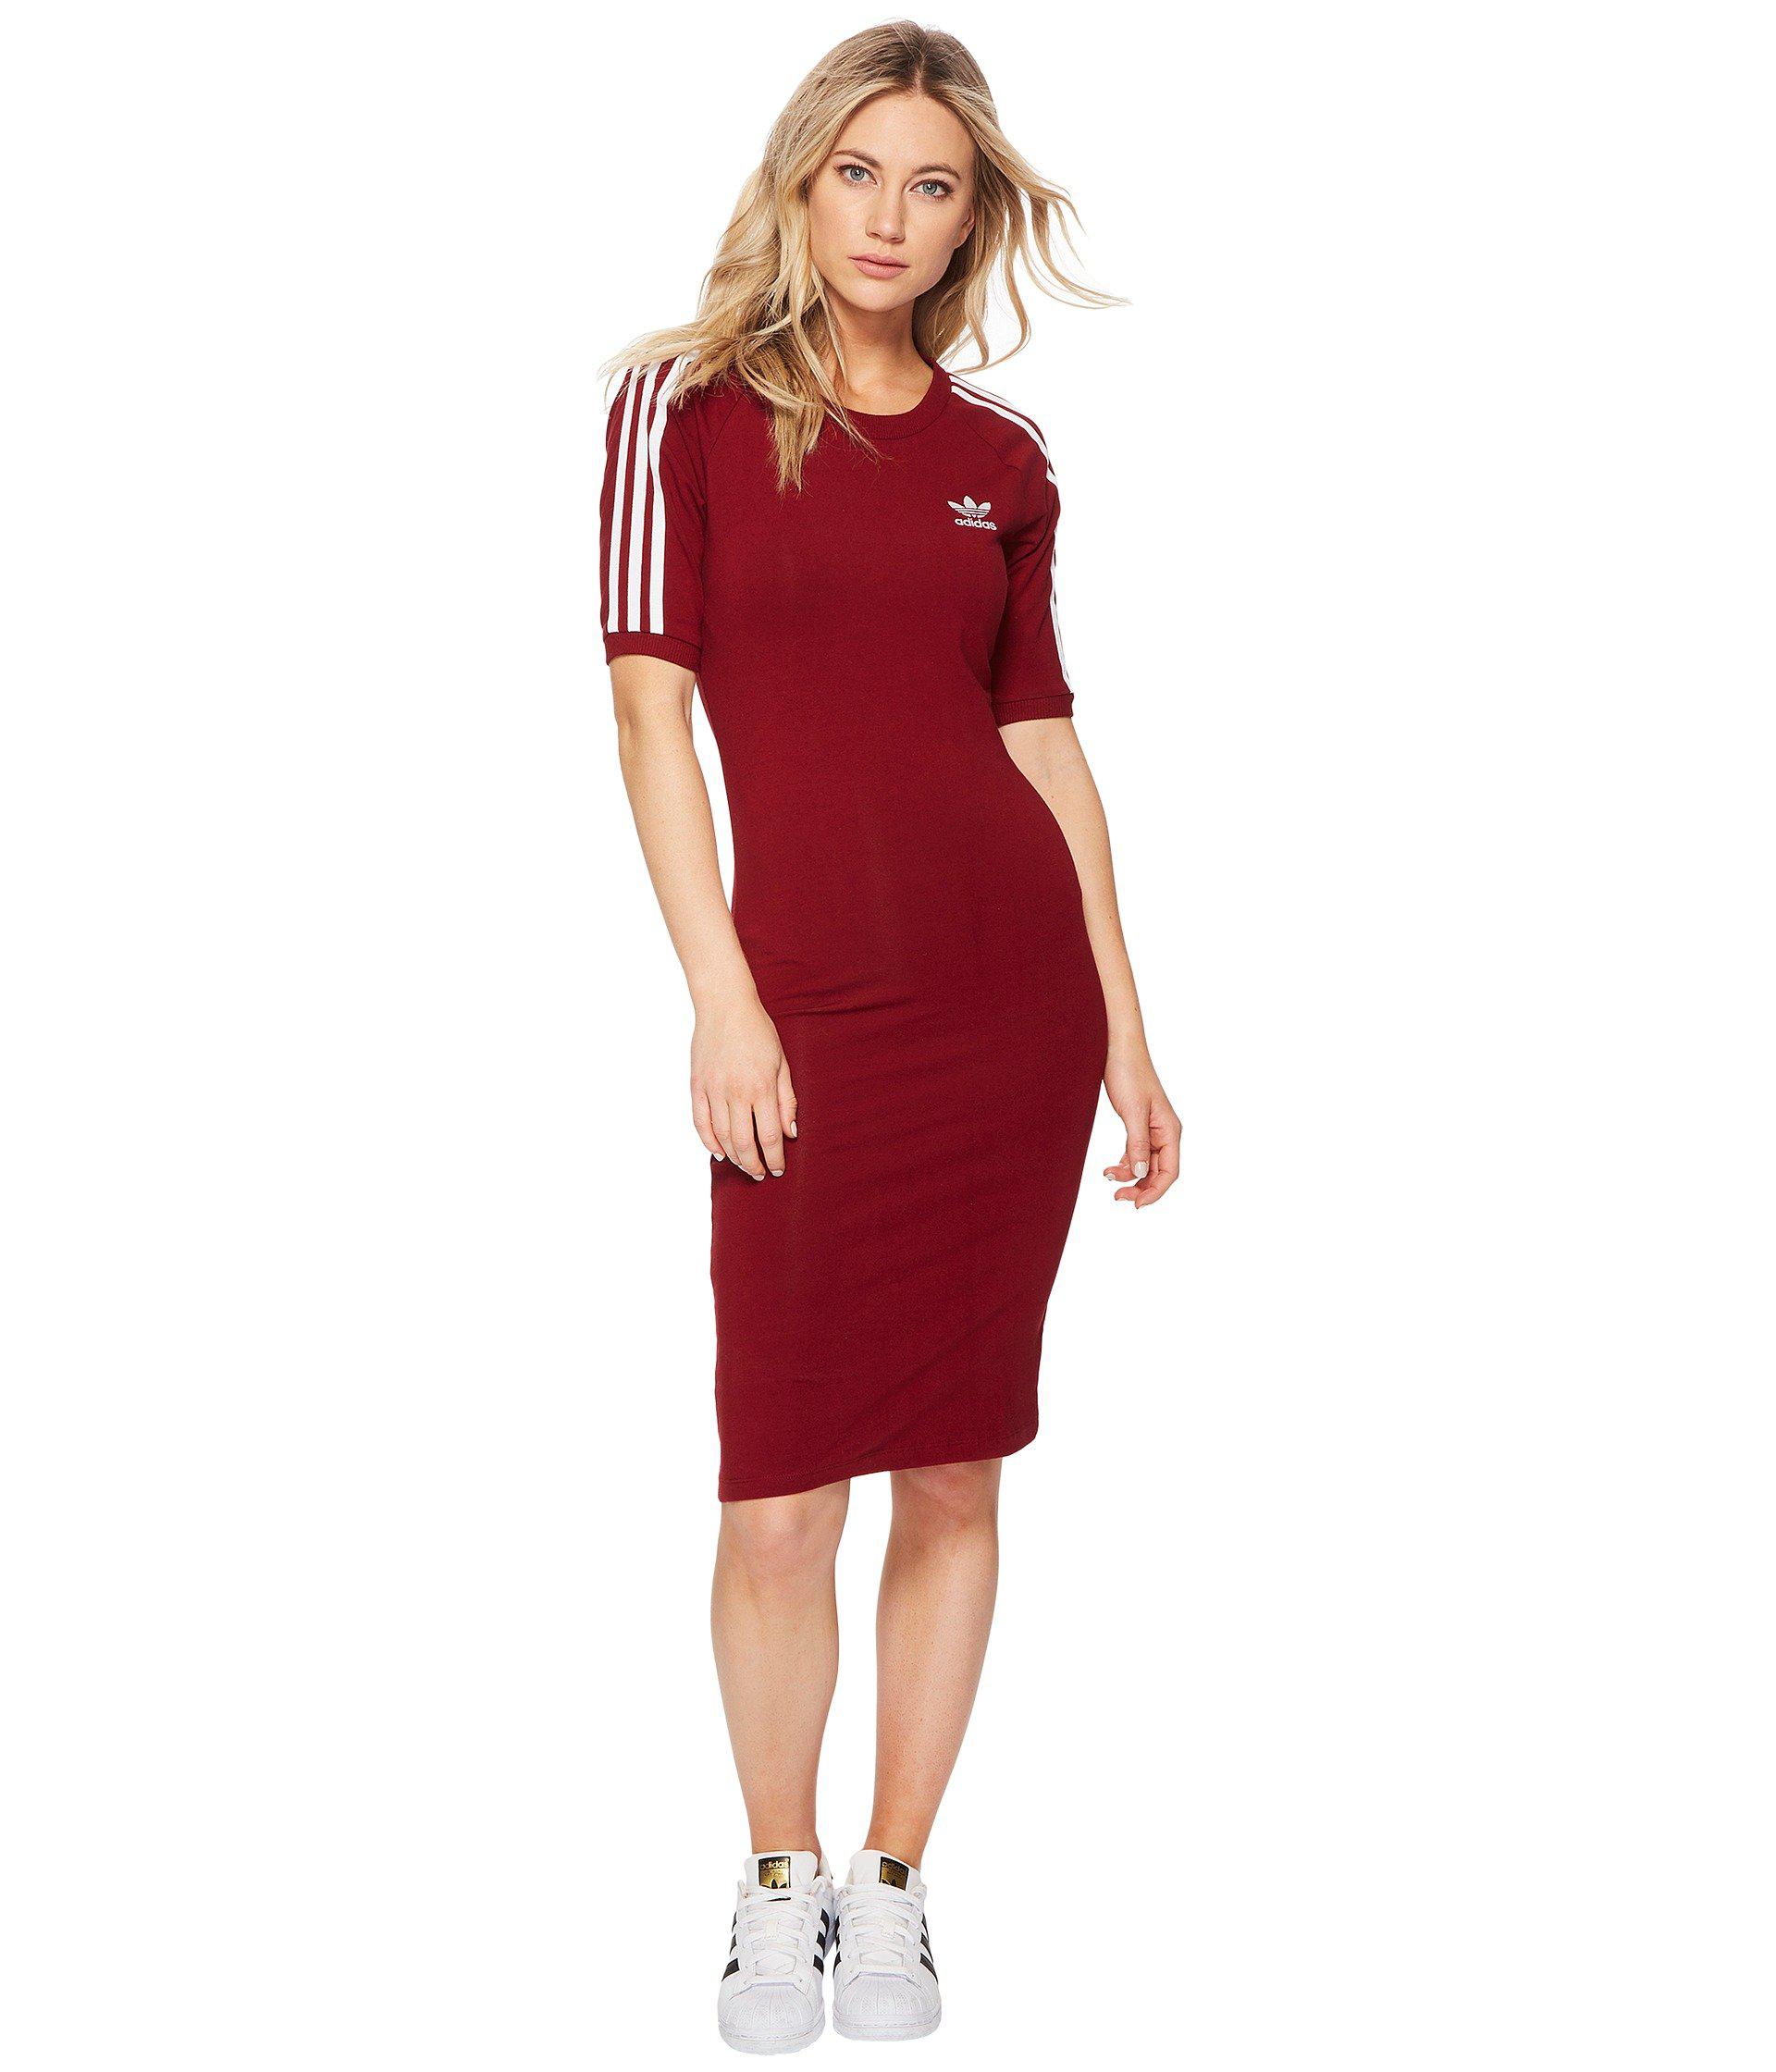 Poderoso Banzai el centro comercial adidas Originals 3 Stripes Dress in Red | Lyst